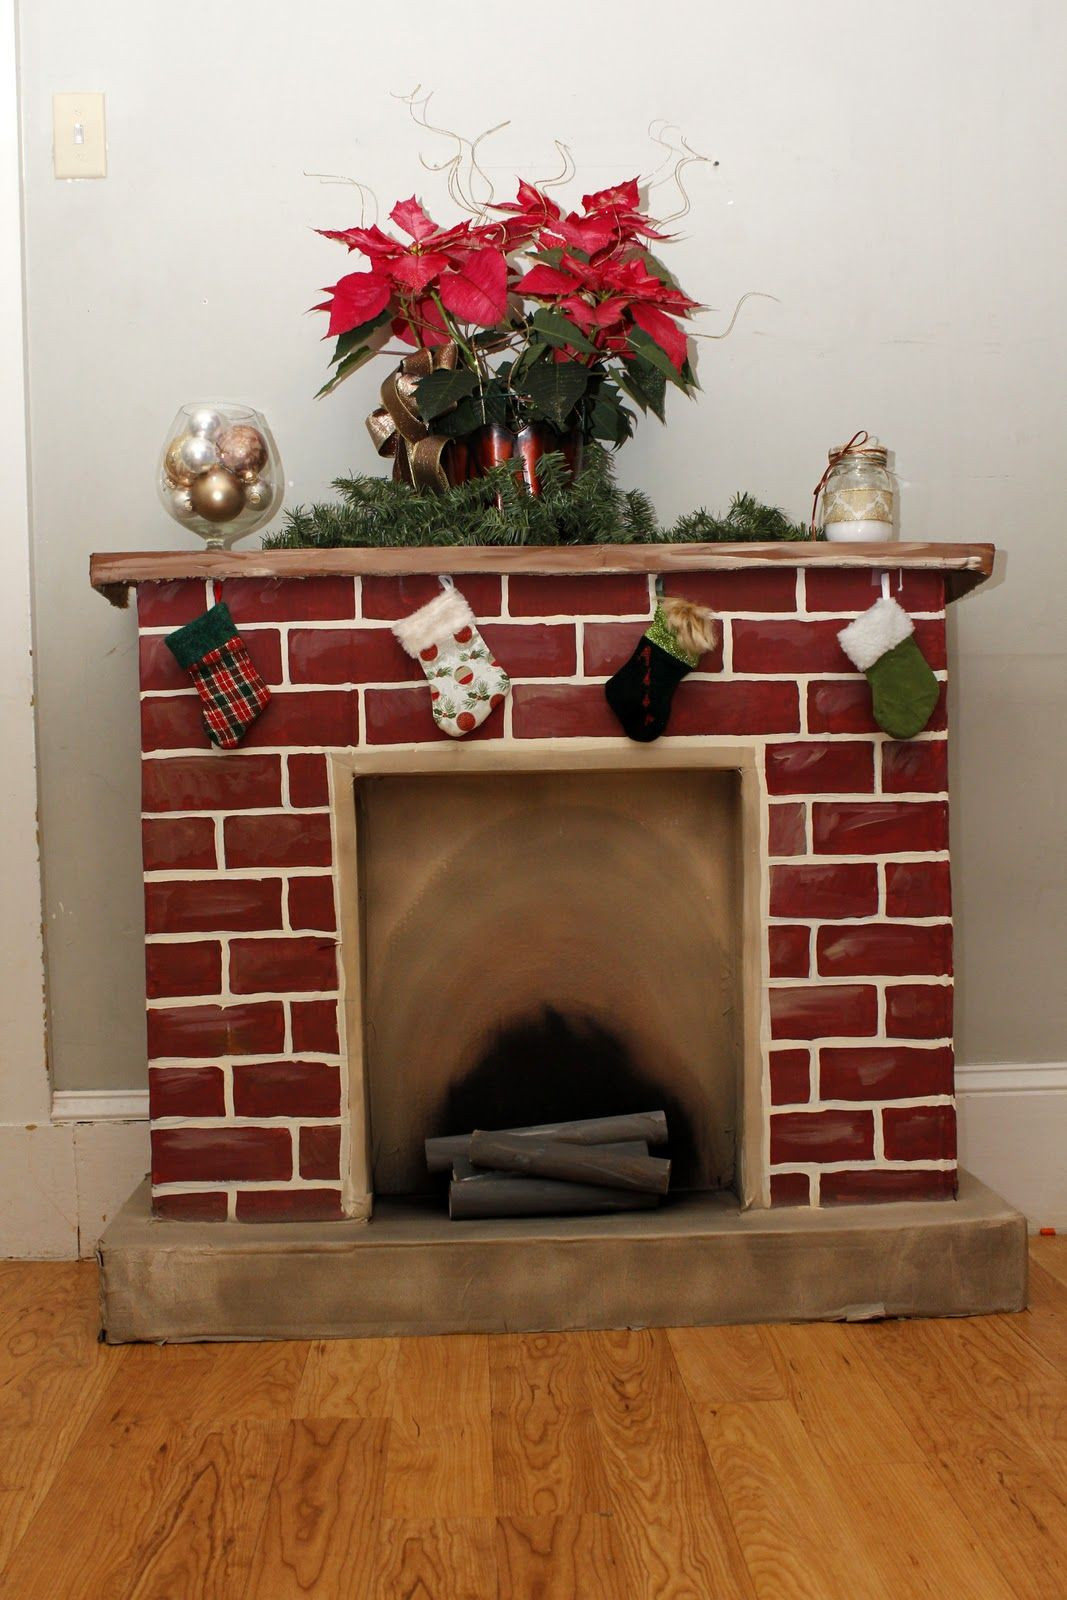 DIY Cardboard Fireplace
 365 Days to Simplicity Chestnuts roasting on an cardboard